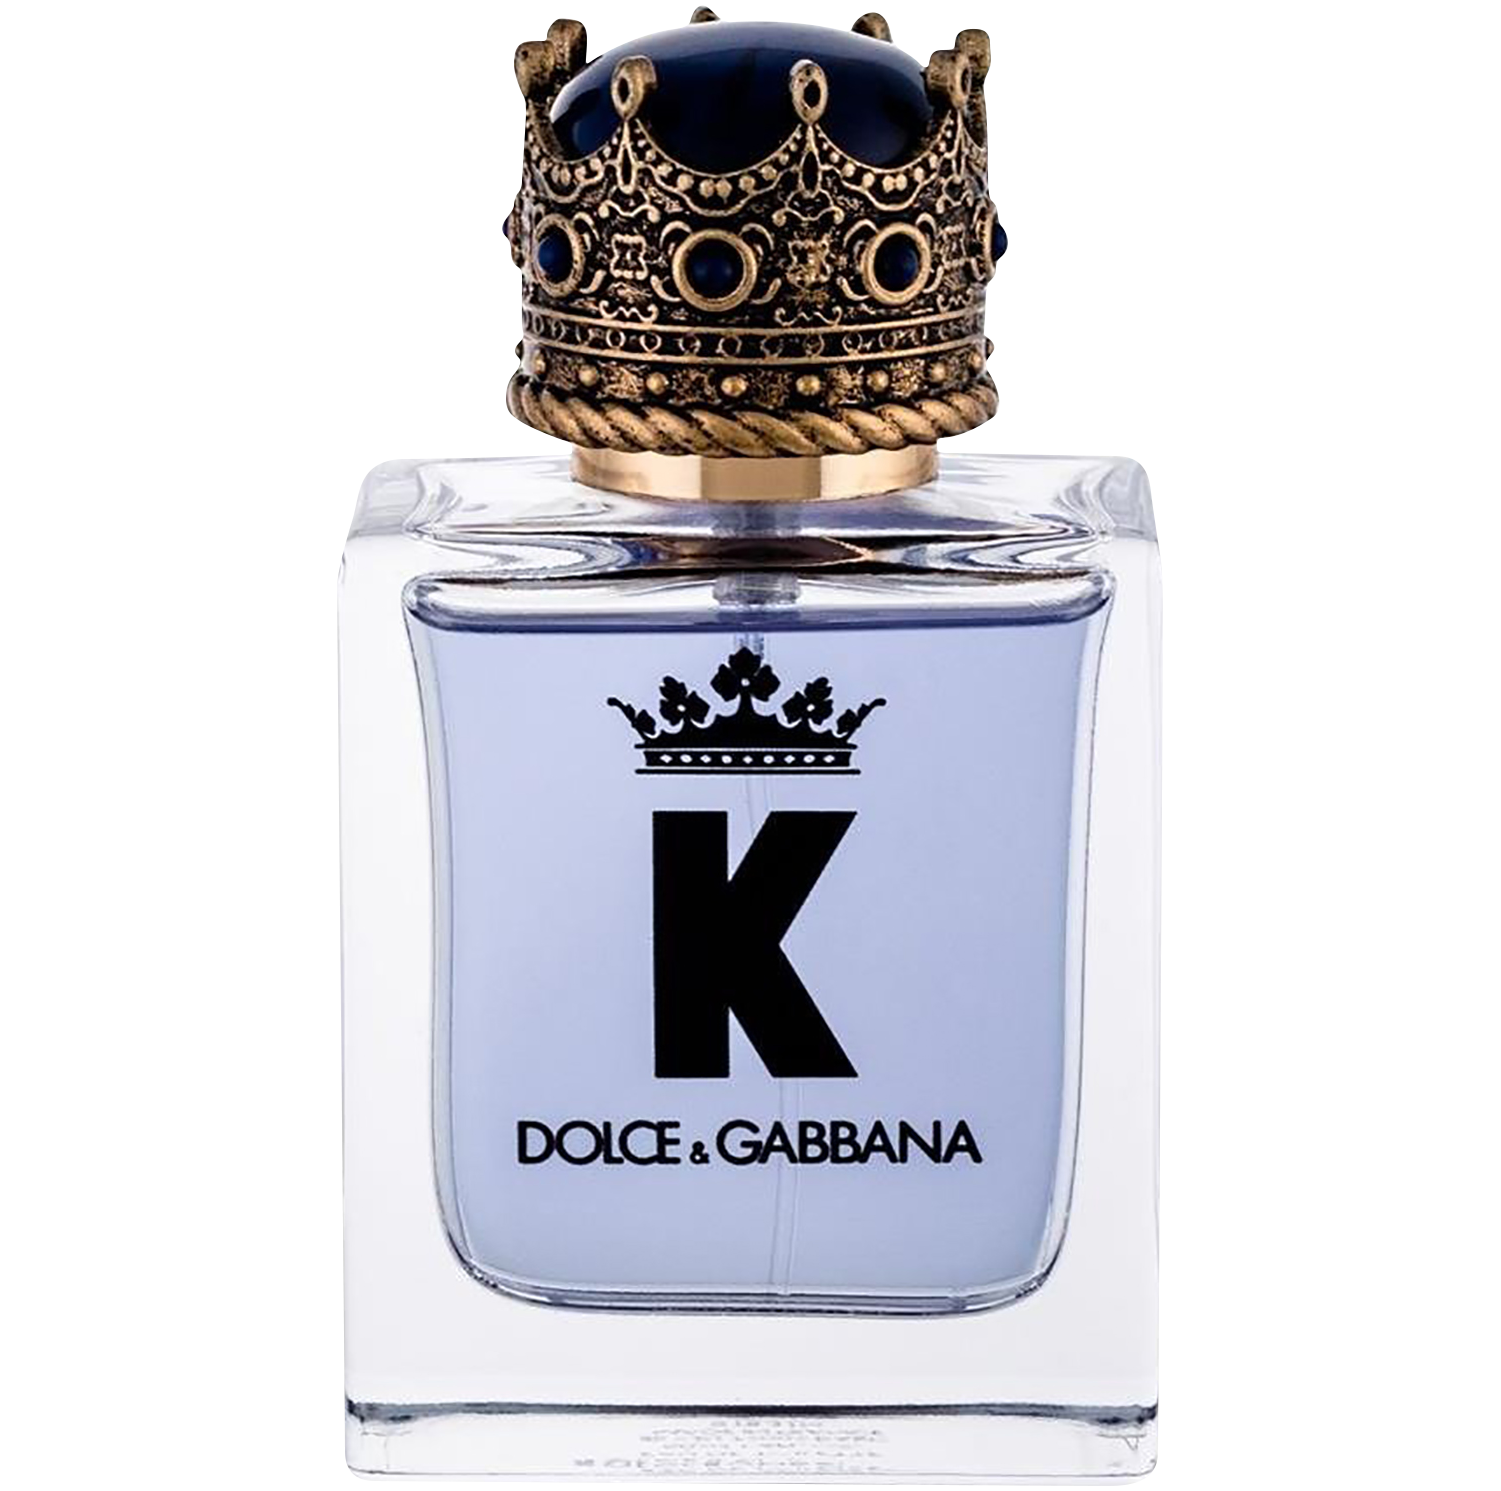 Dolce&Gabbana K woda toaletowa męska, 50 ml | hebe.pl